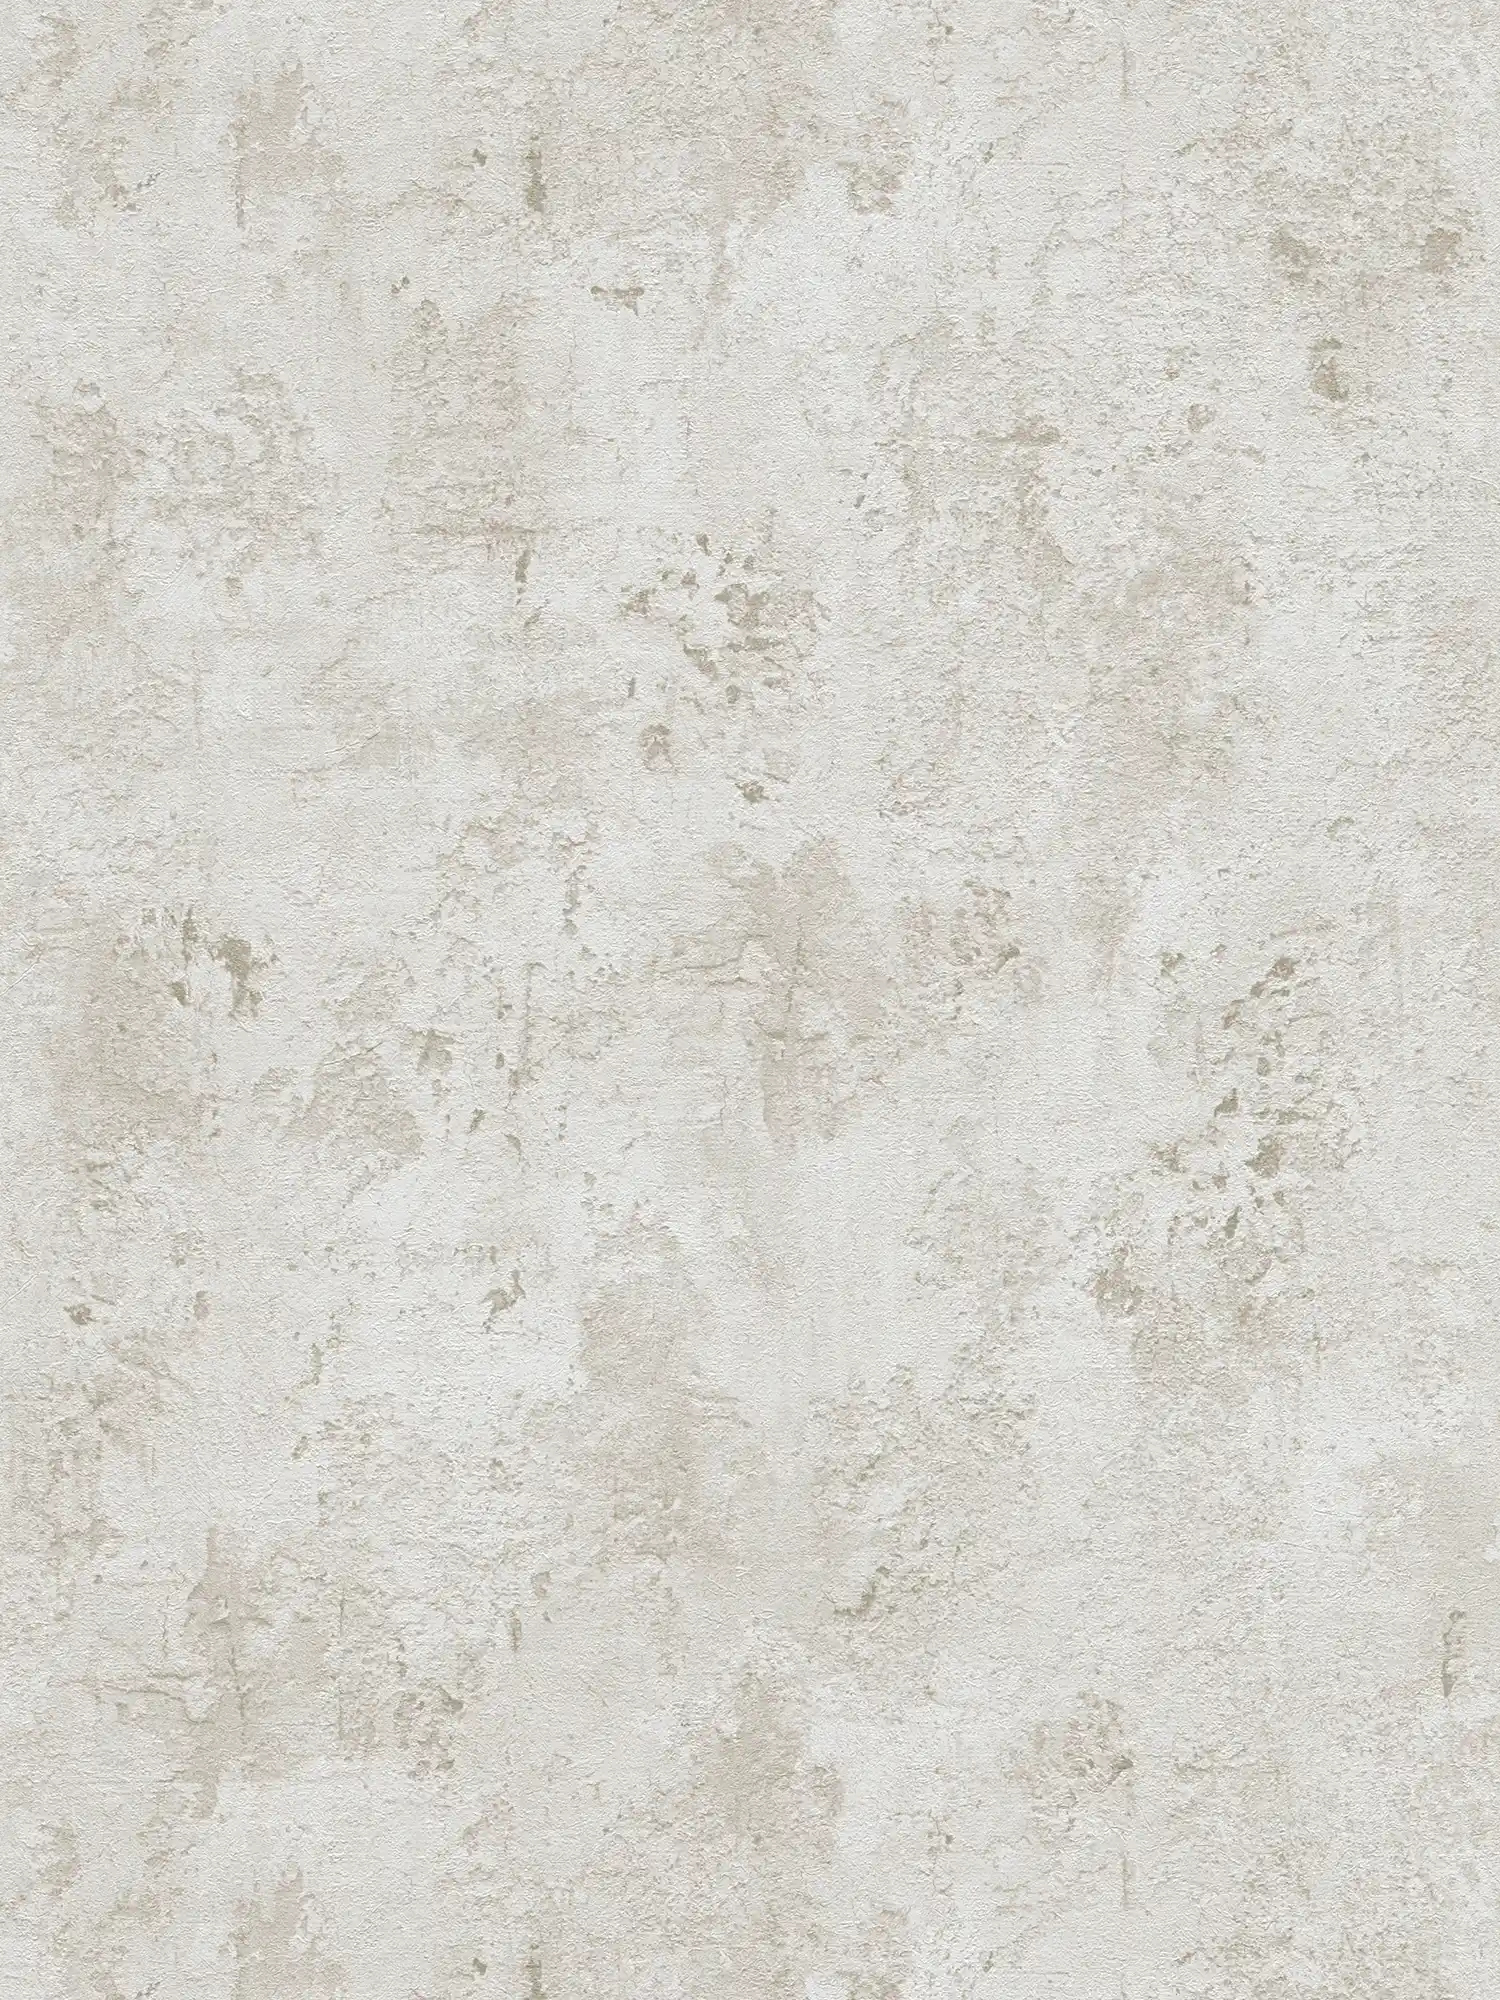 Plaster optics wallpaper with structural pattern - grey, beige
